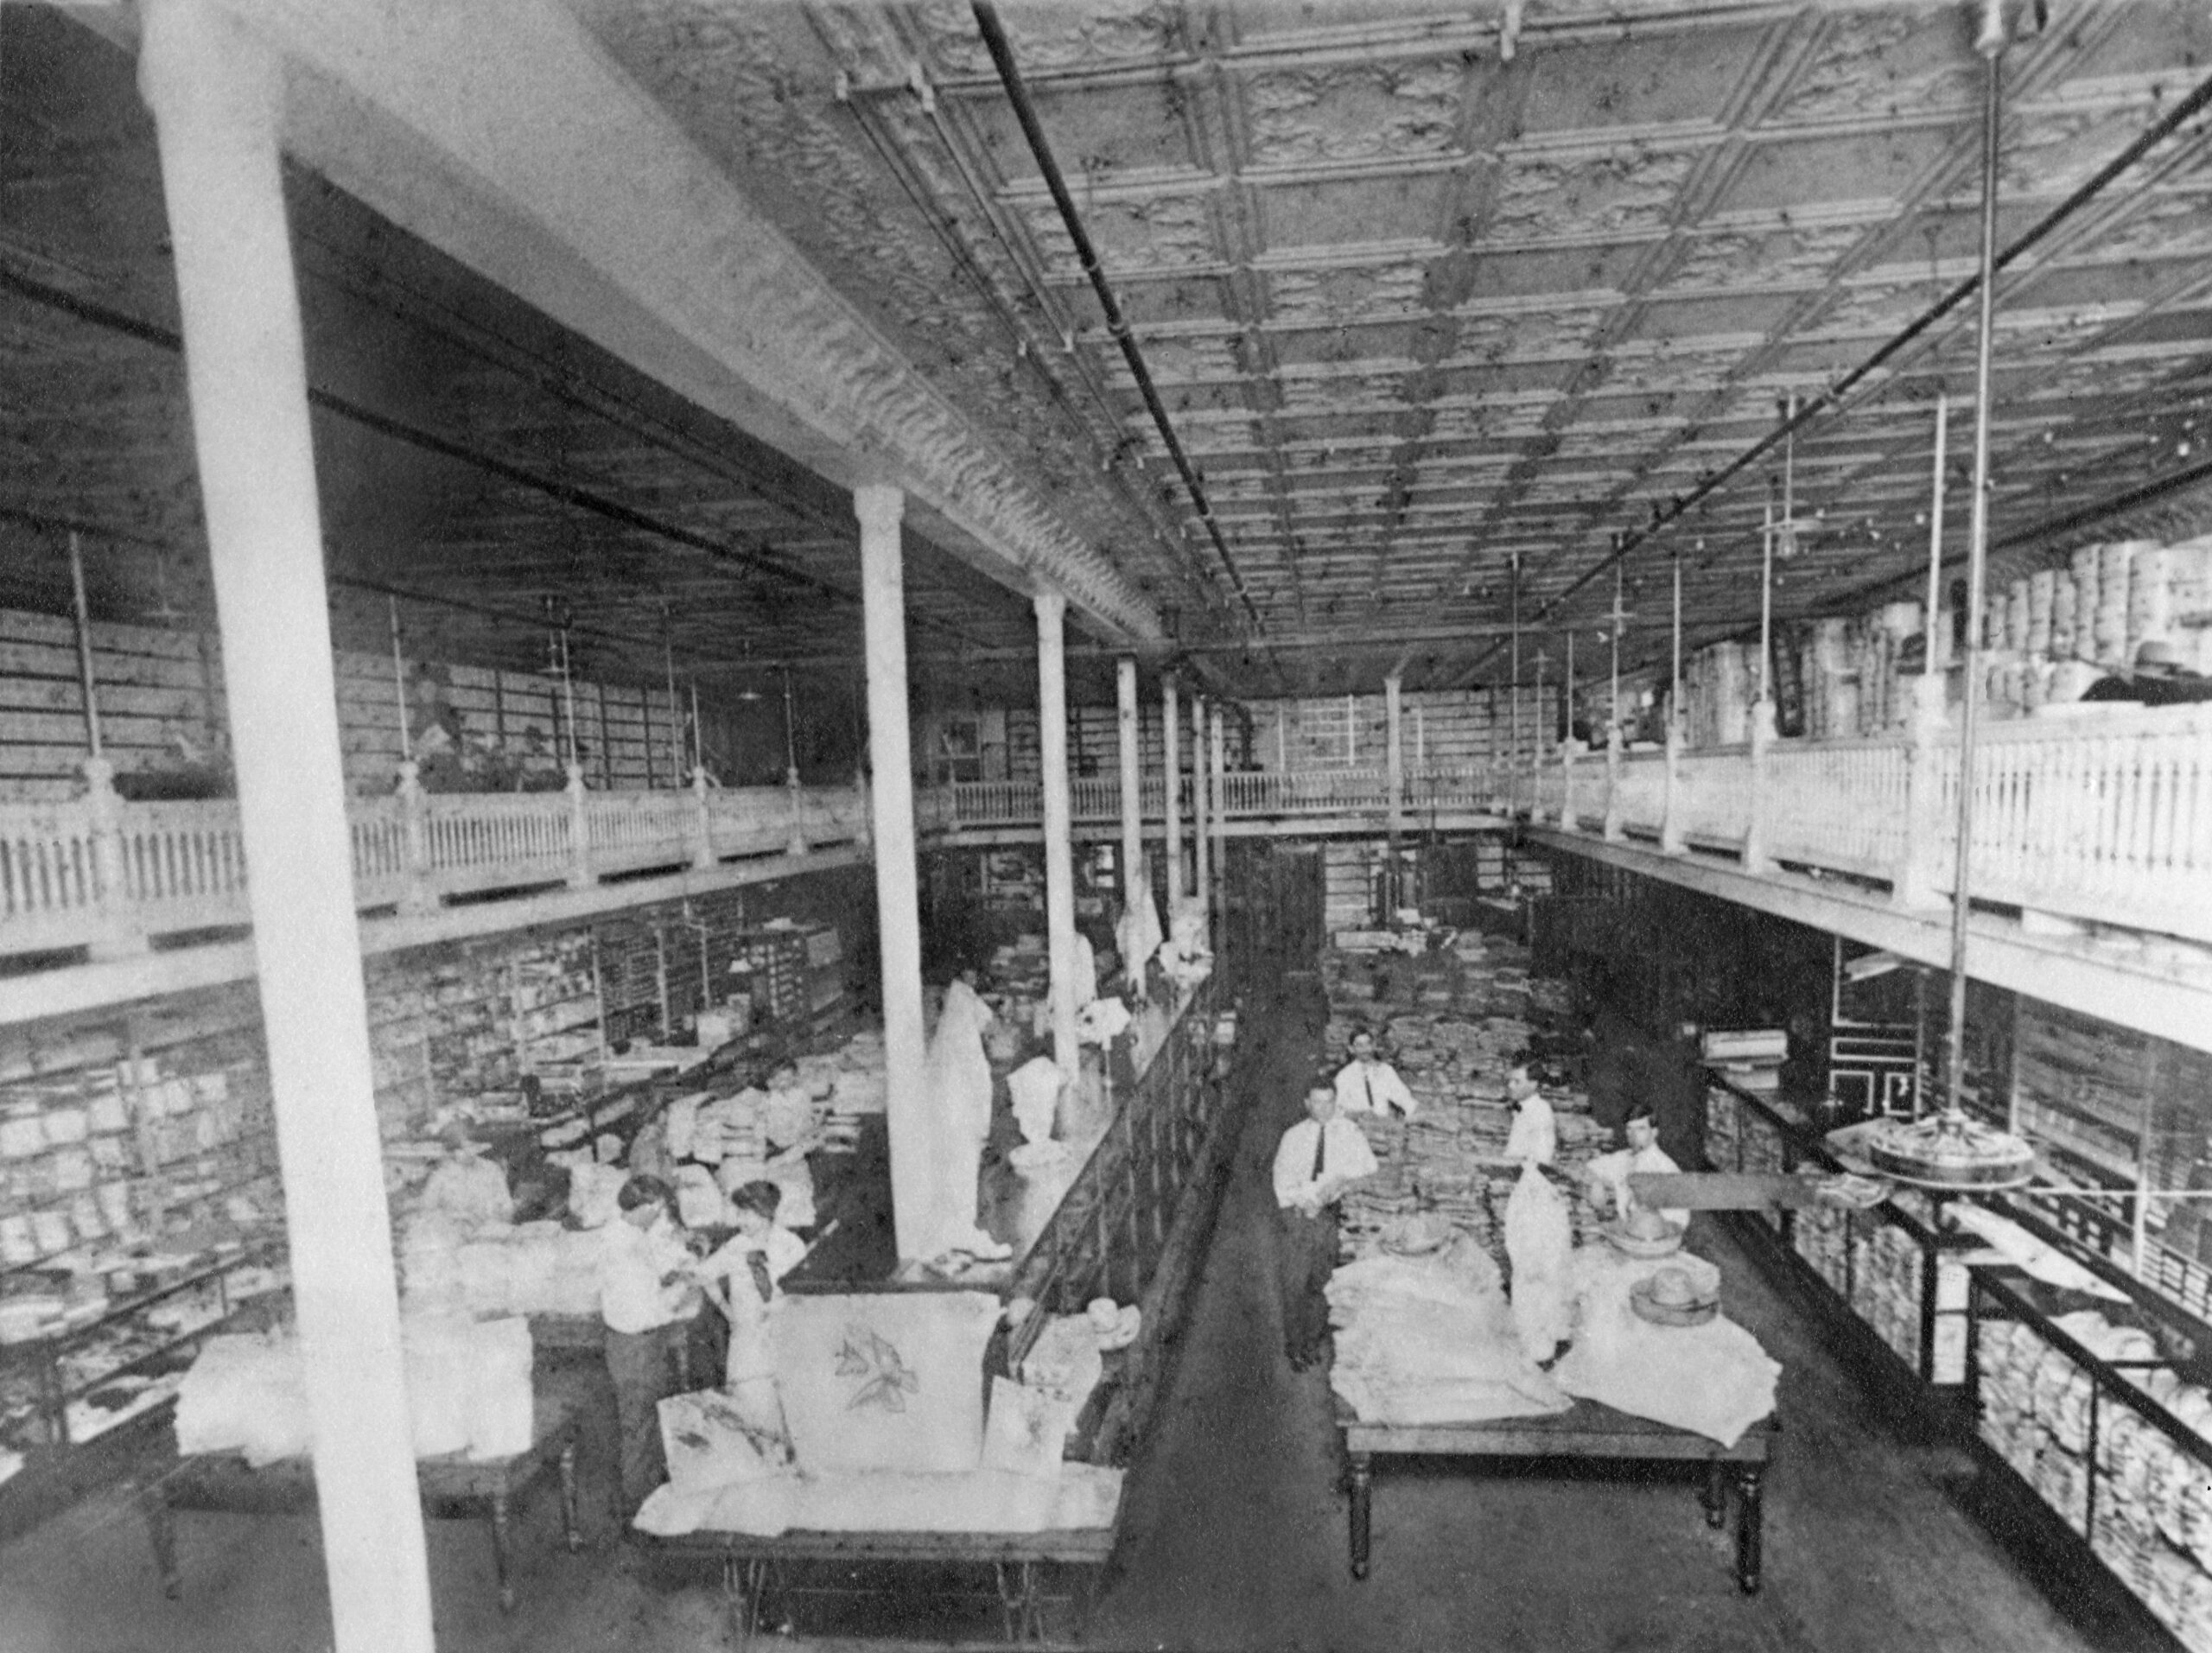 The History of the John B. Ragland Mercantile Building